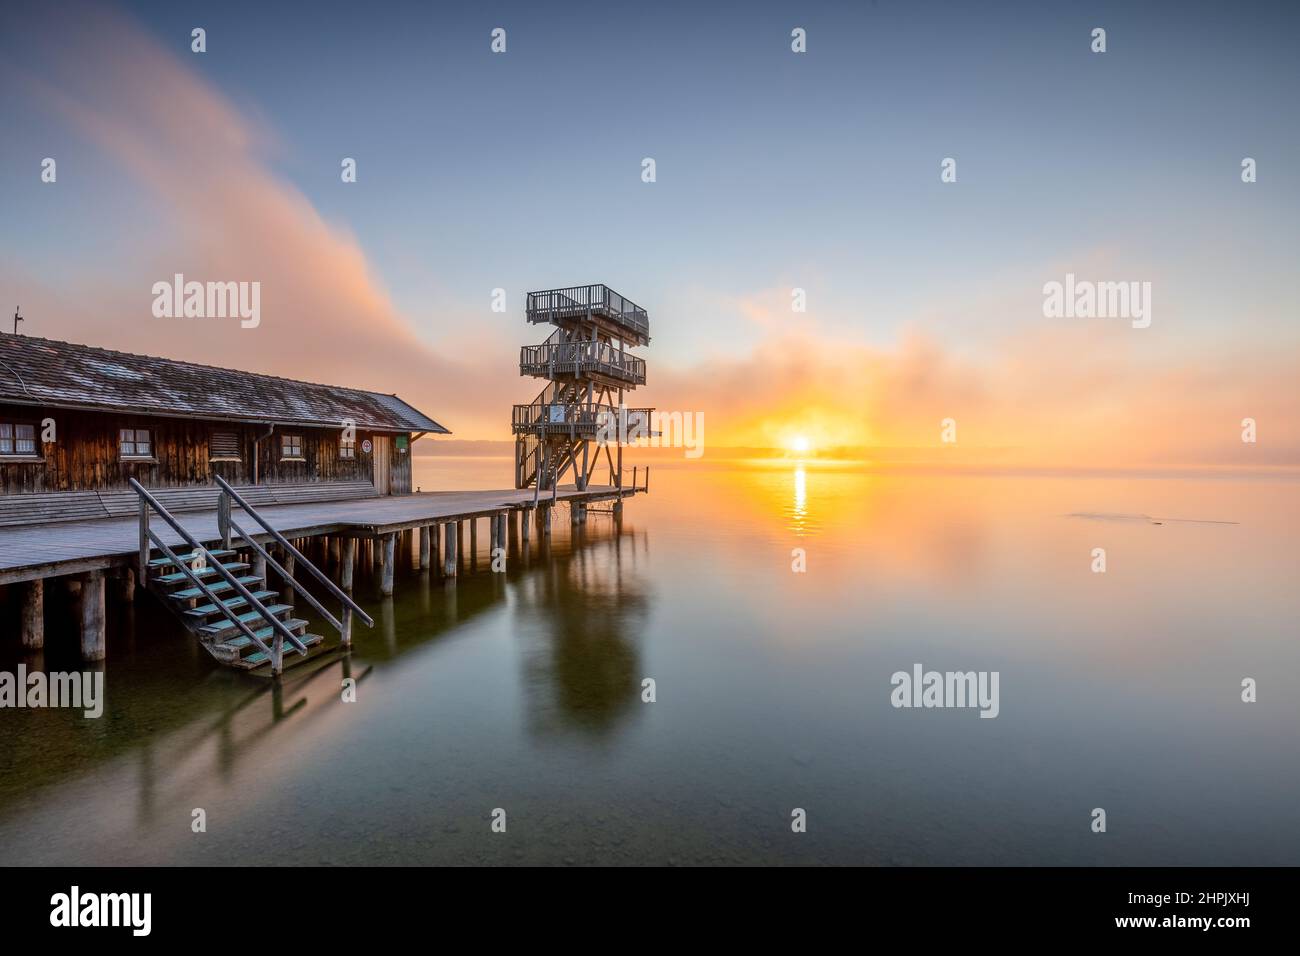 Sunrise at the lake Stock Photo